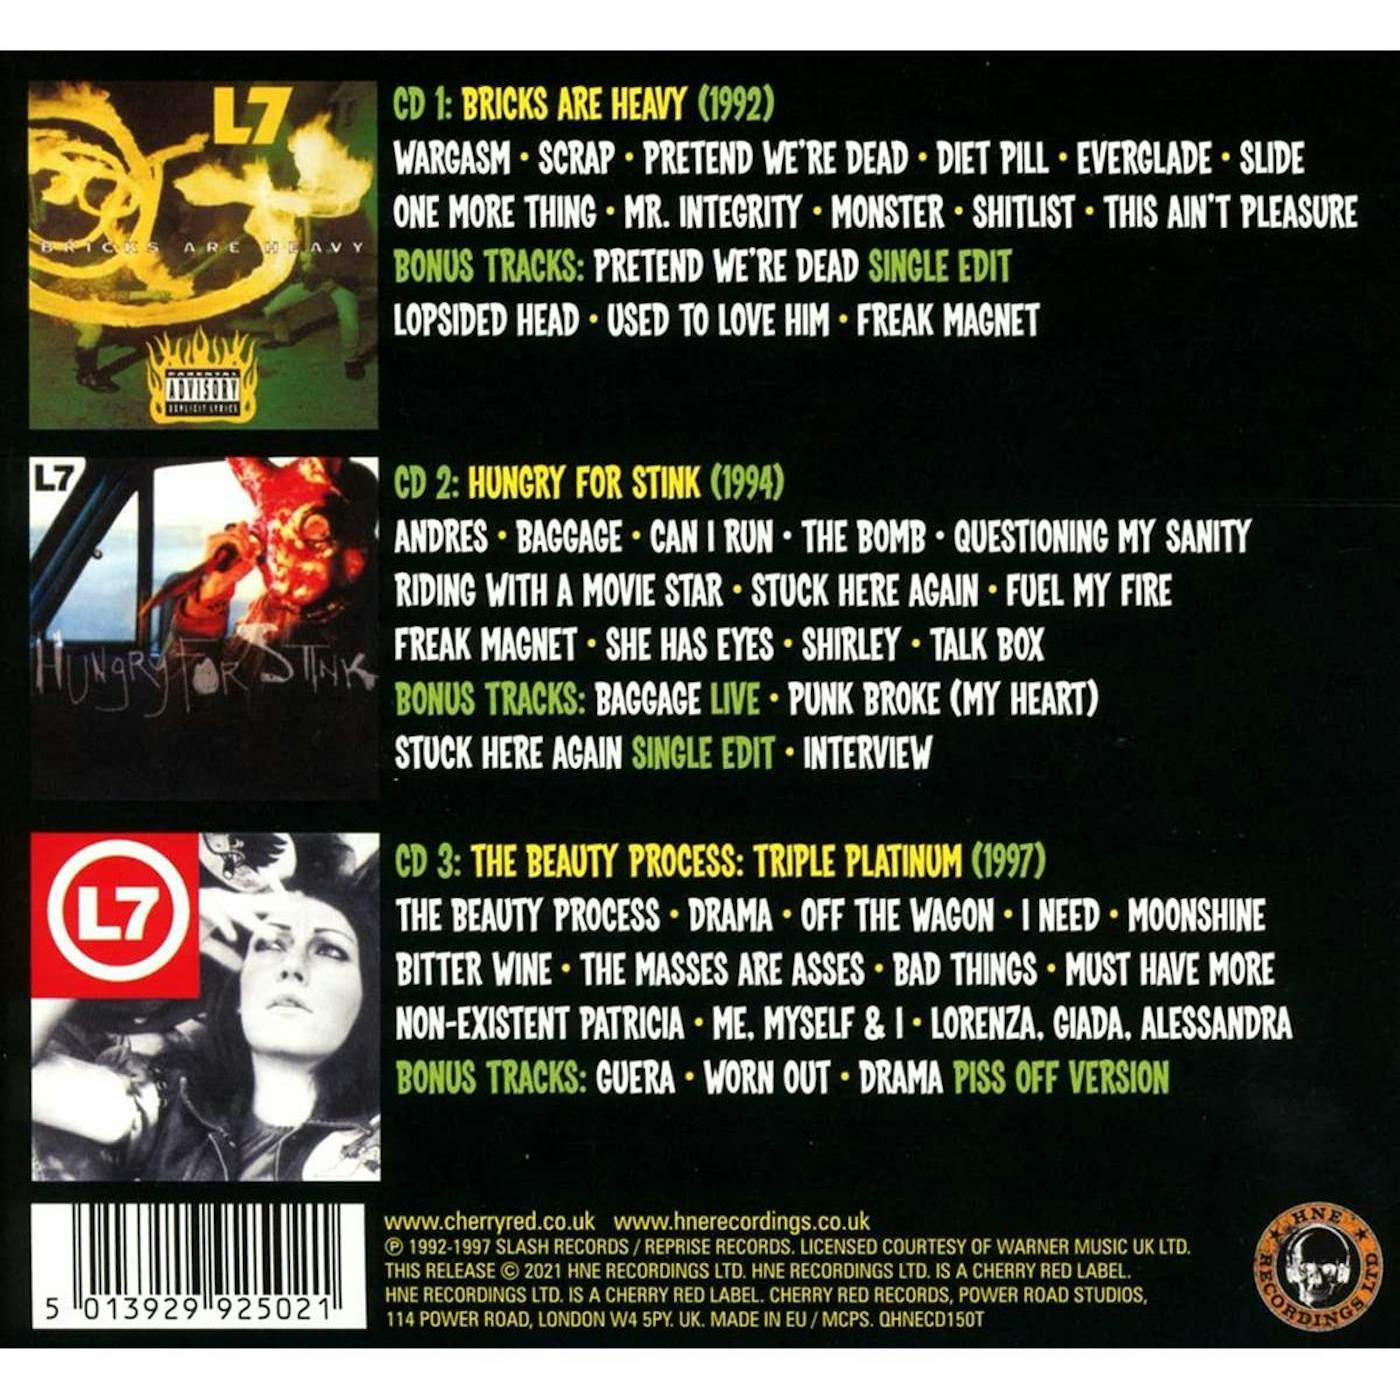 L7 Wargasm: Slash Years 1992-1997 (3CD Box Set)